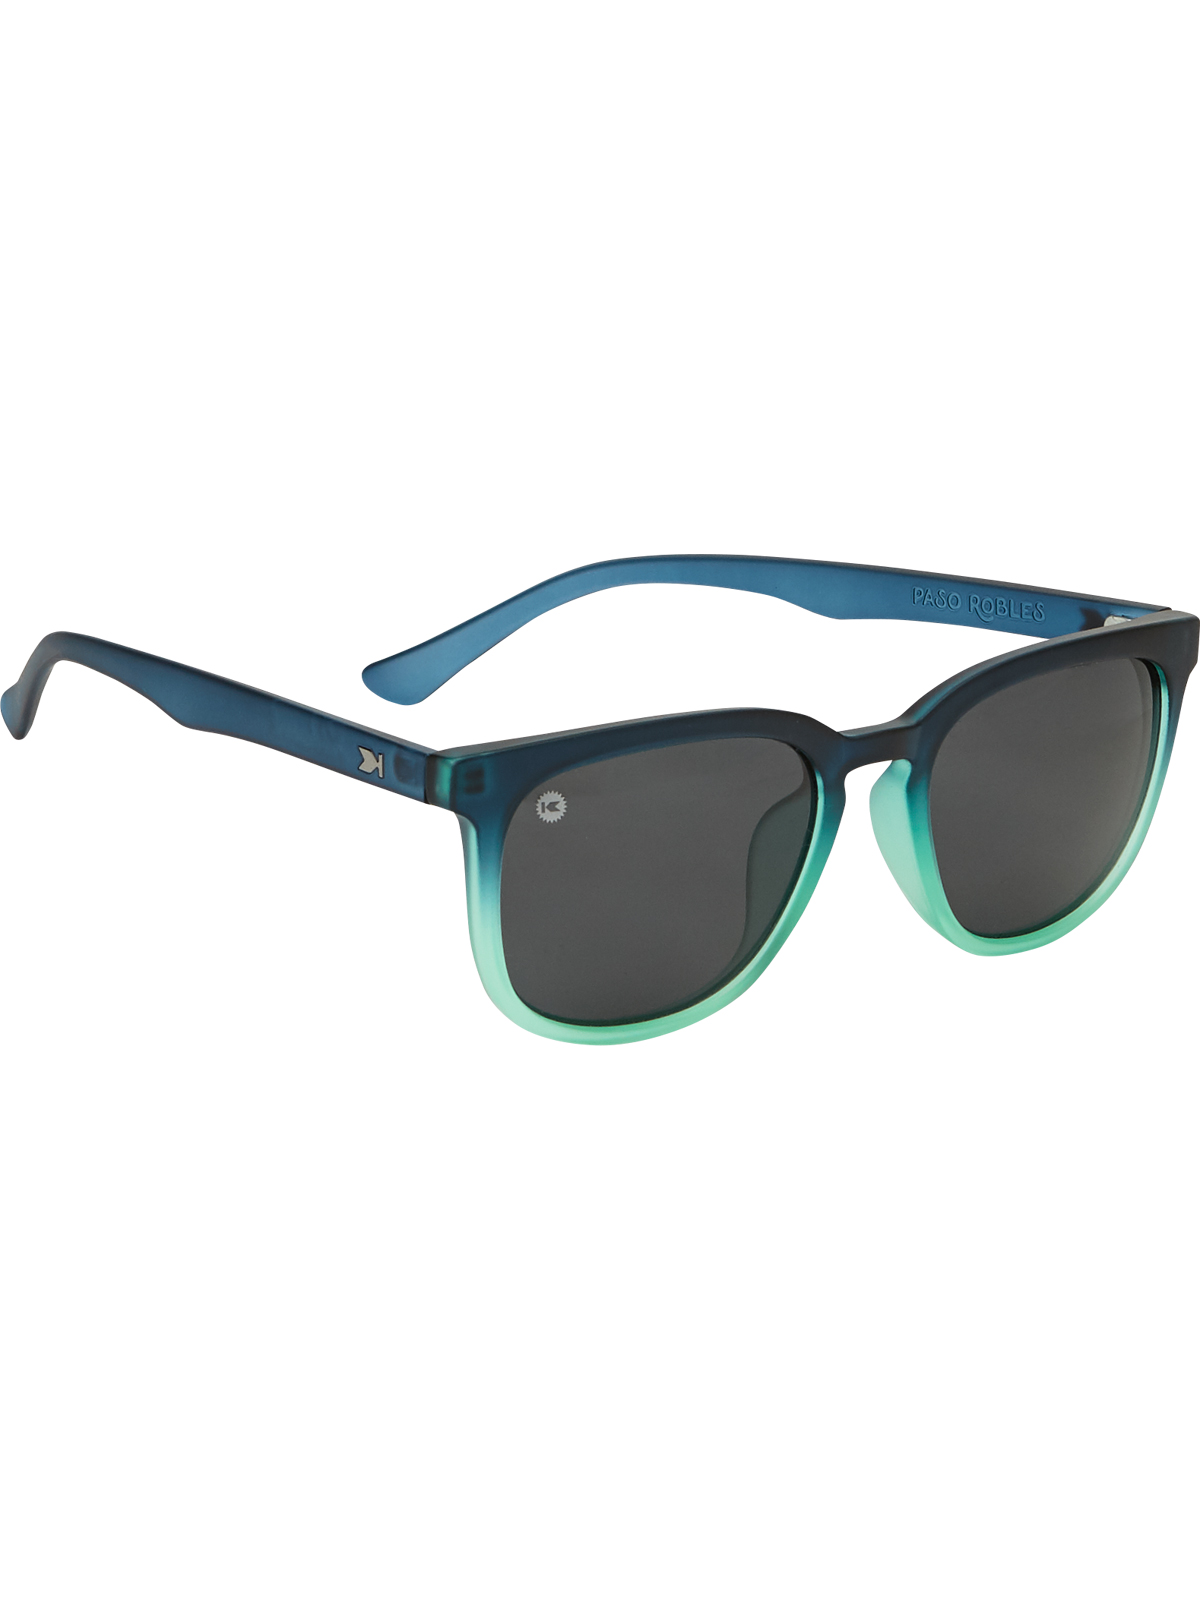 Knockaround Sporty Polarized Sunglasses: Hermera